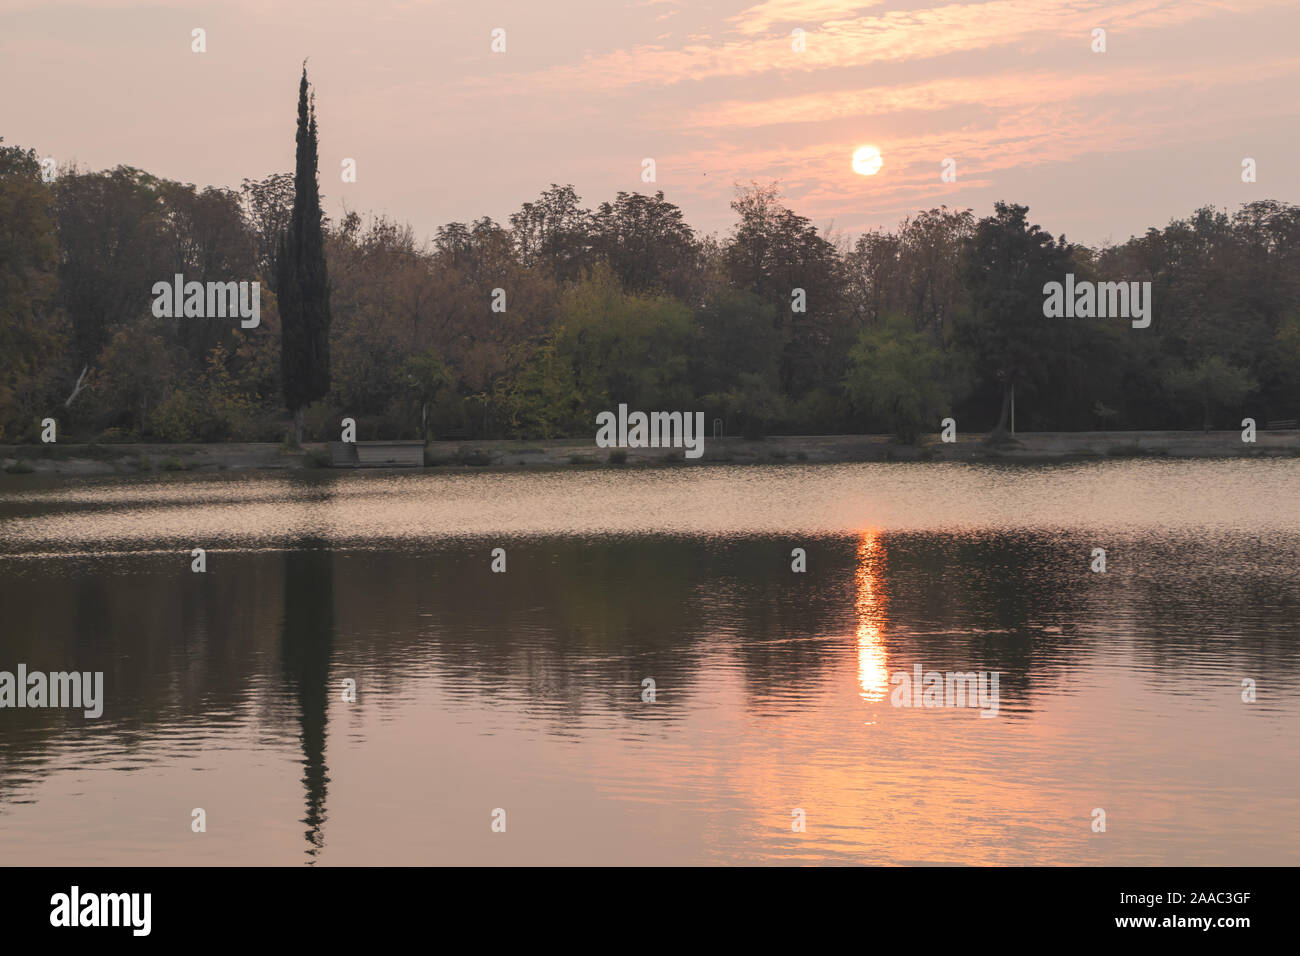 Stara Zagora, Bulgarien - 30. Oktober 2019: Sonnenaufgang über dem See Zagorka. Stockfoto